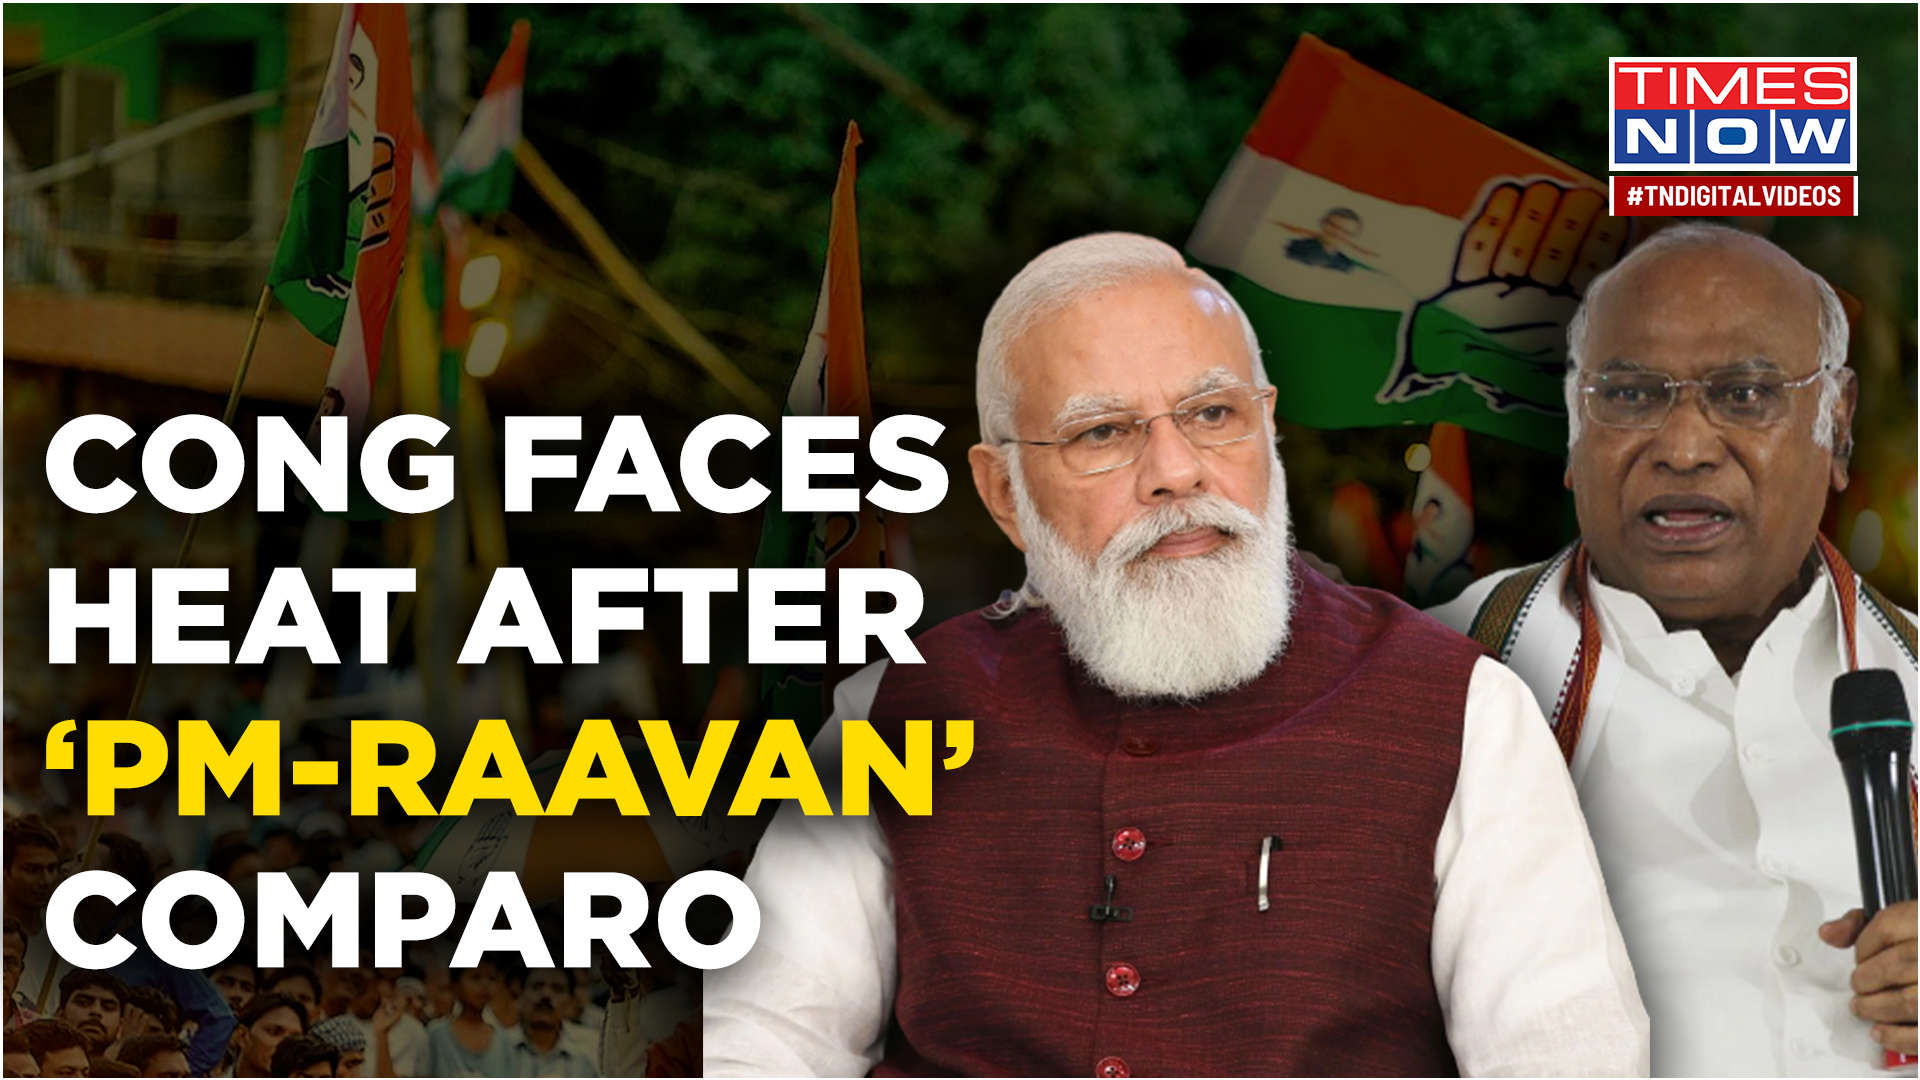 Do You Have 100 Heads Like Raavan': Congress President's Salvo At PM Modi  Triggers Row In Gujarat